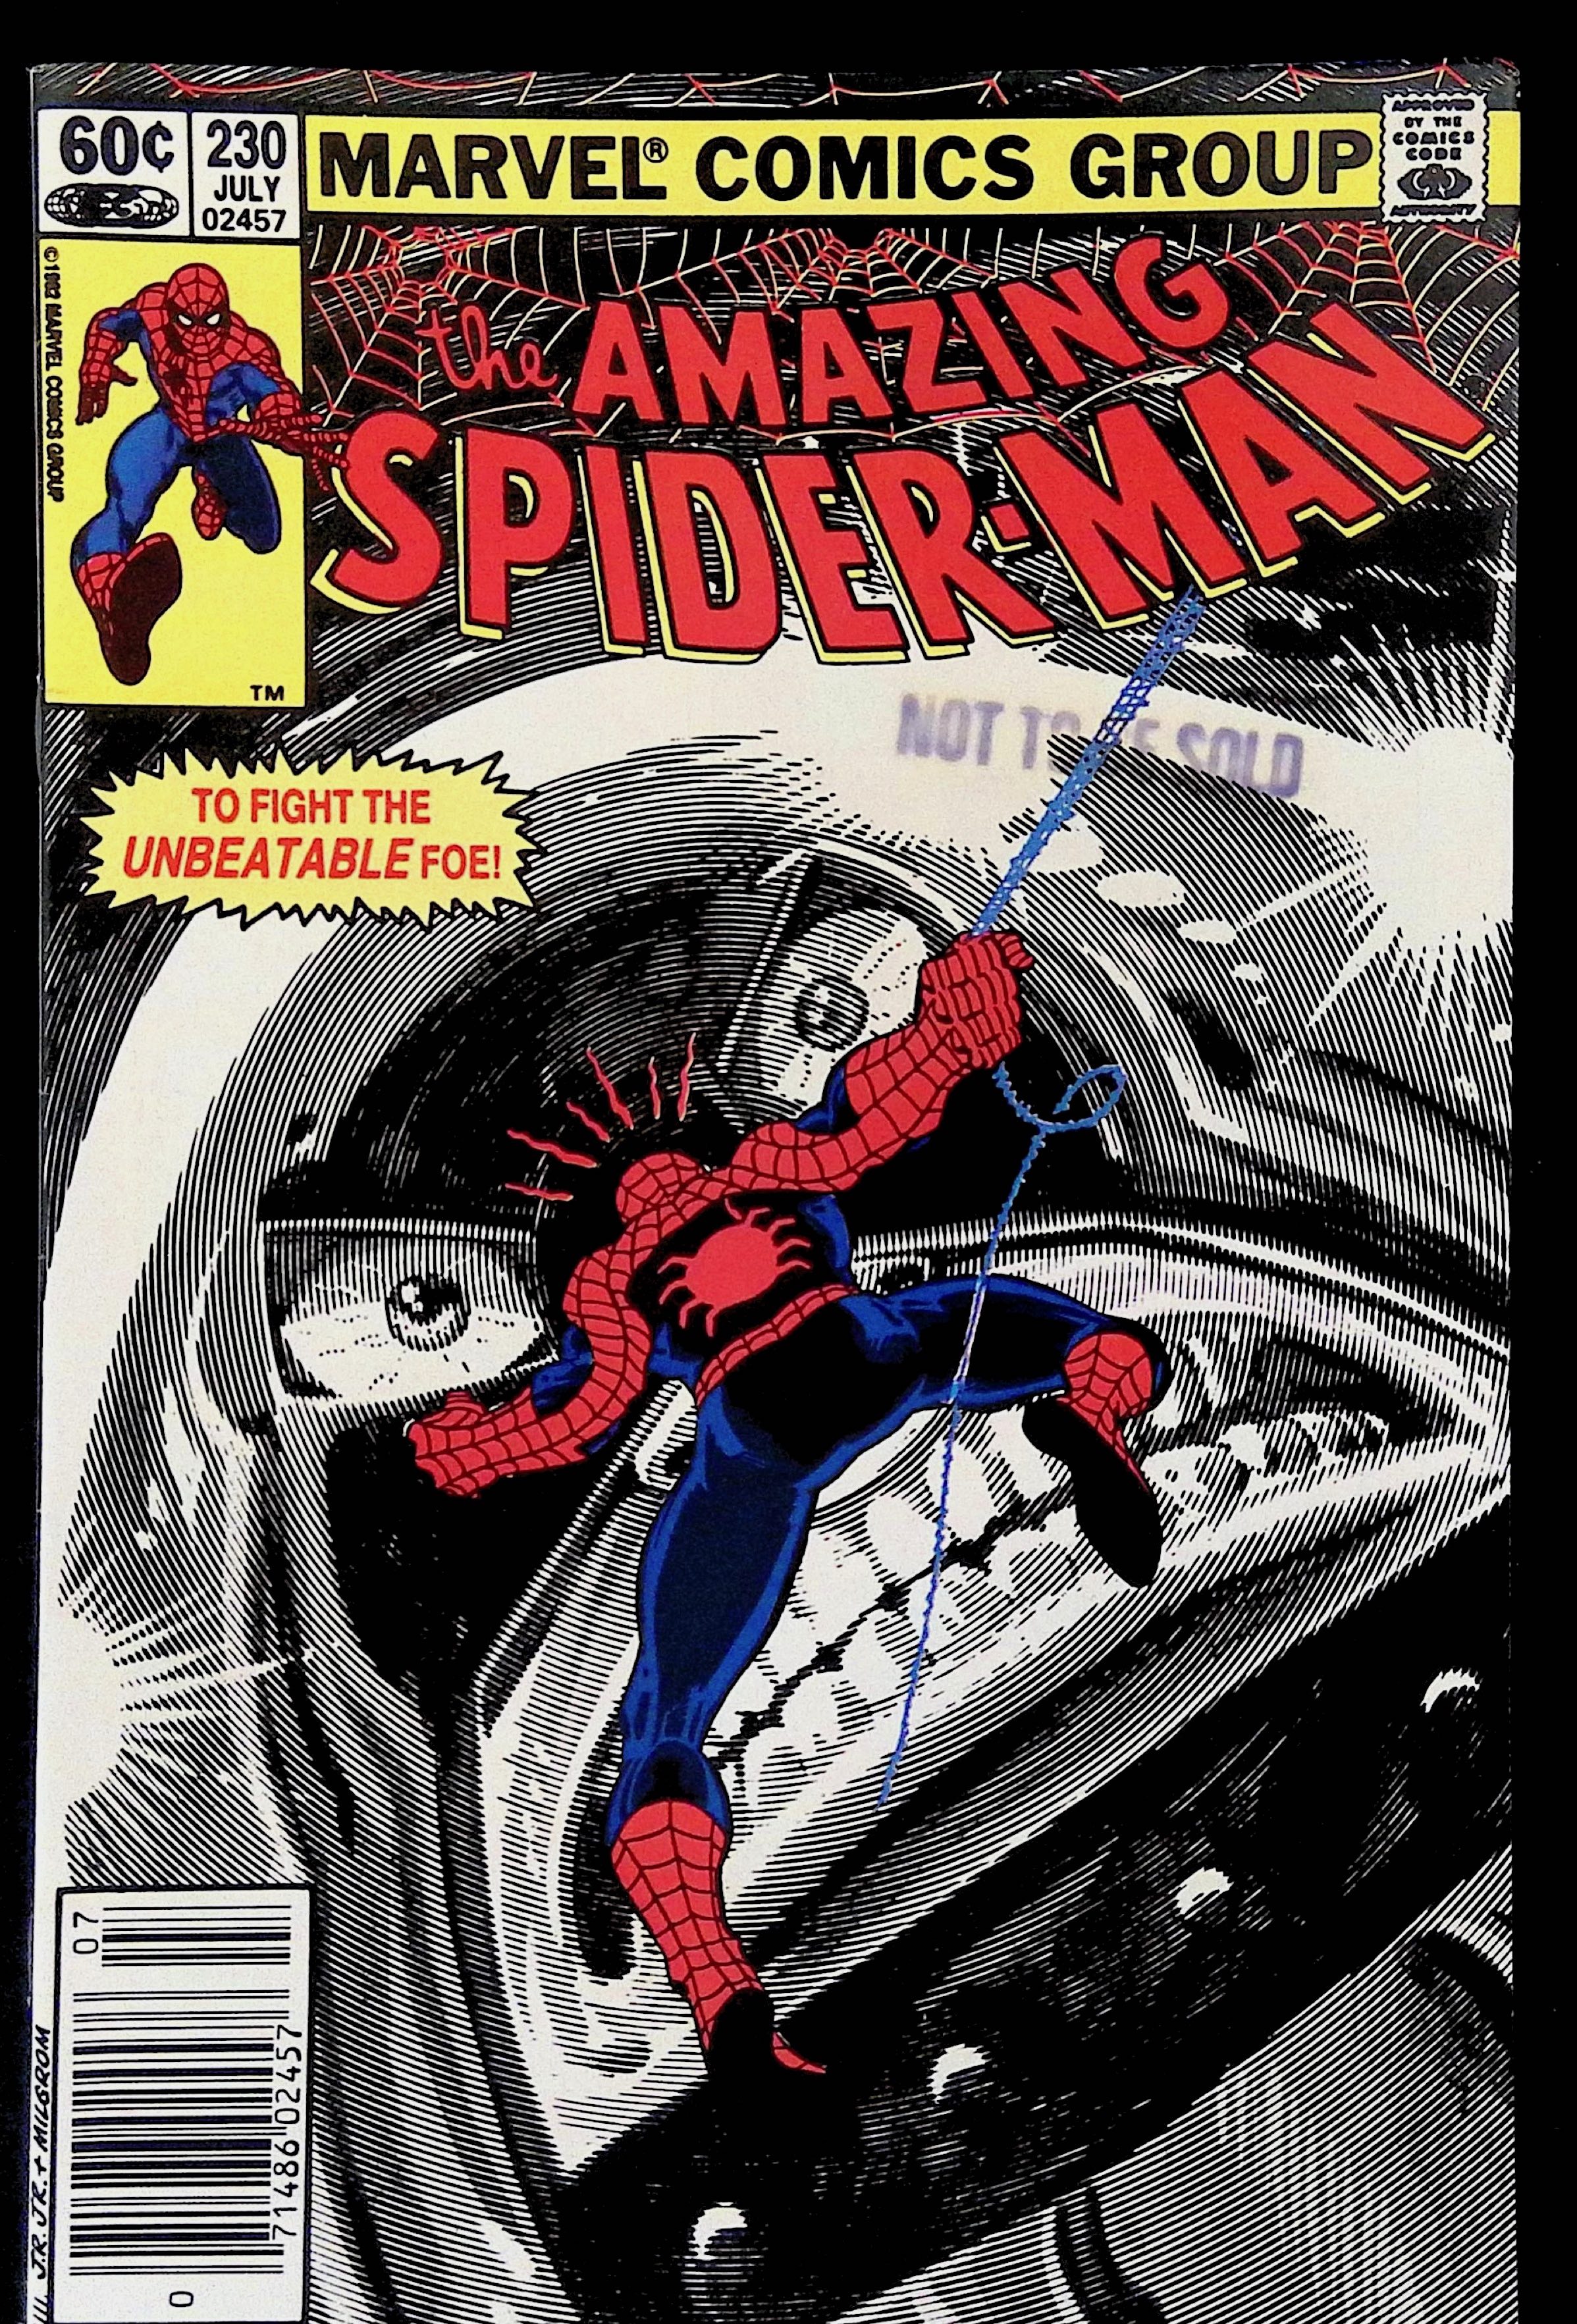 spiderman230.jpg